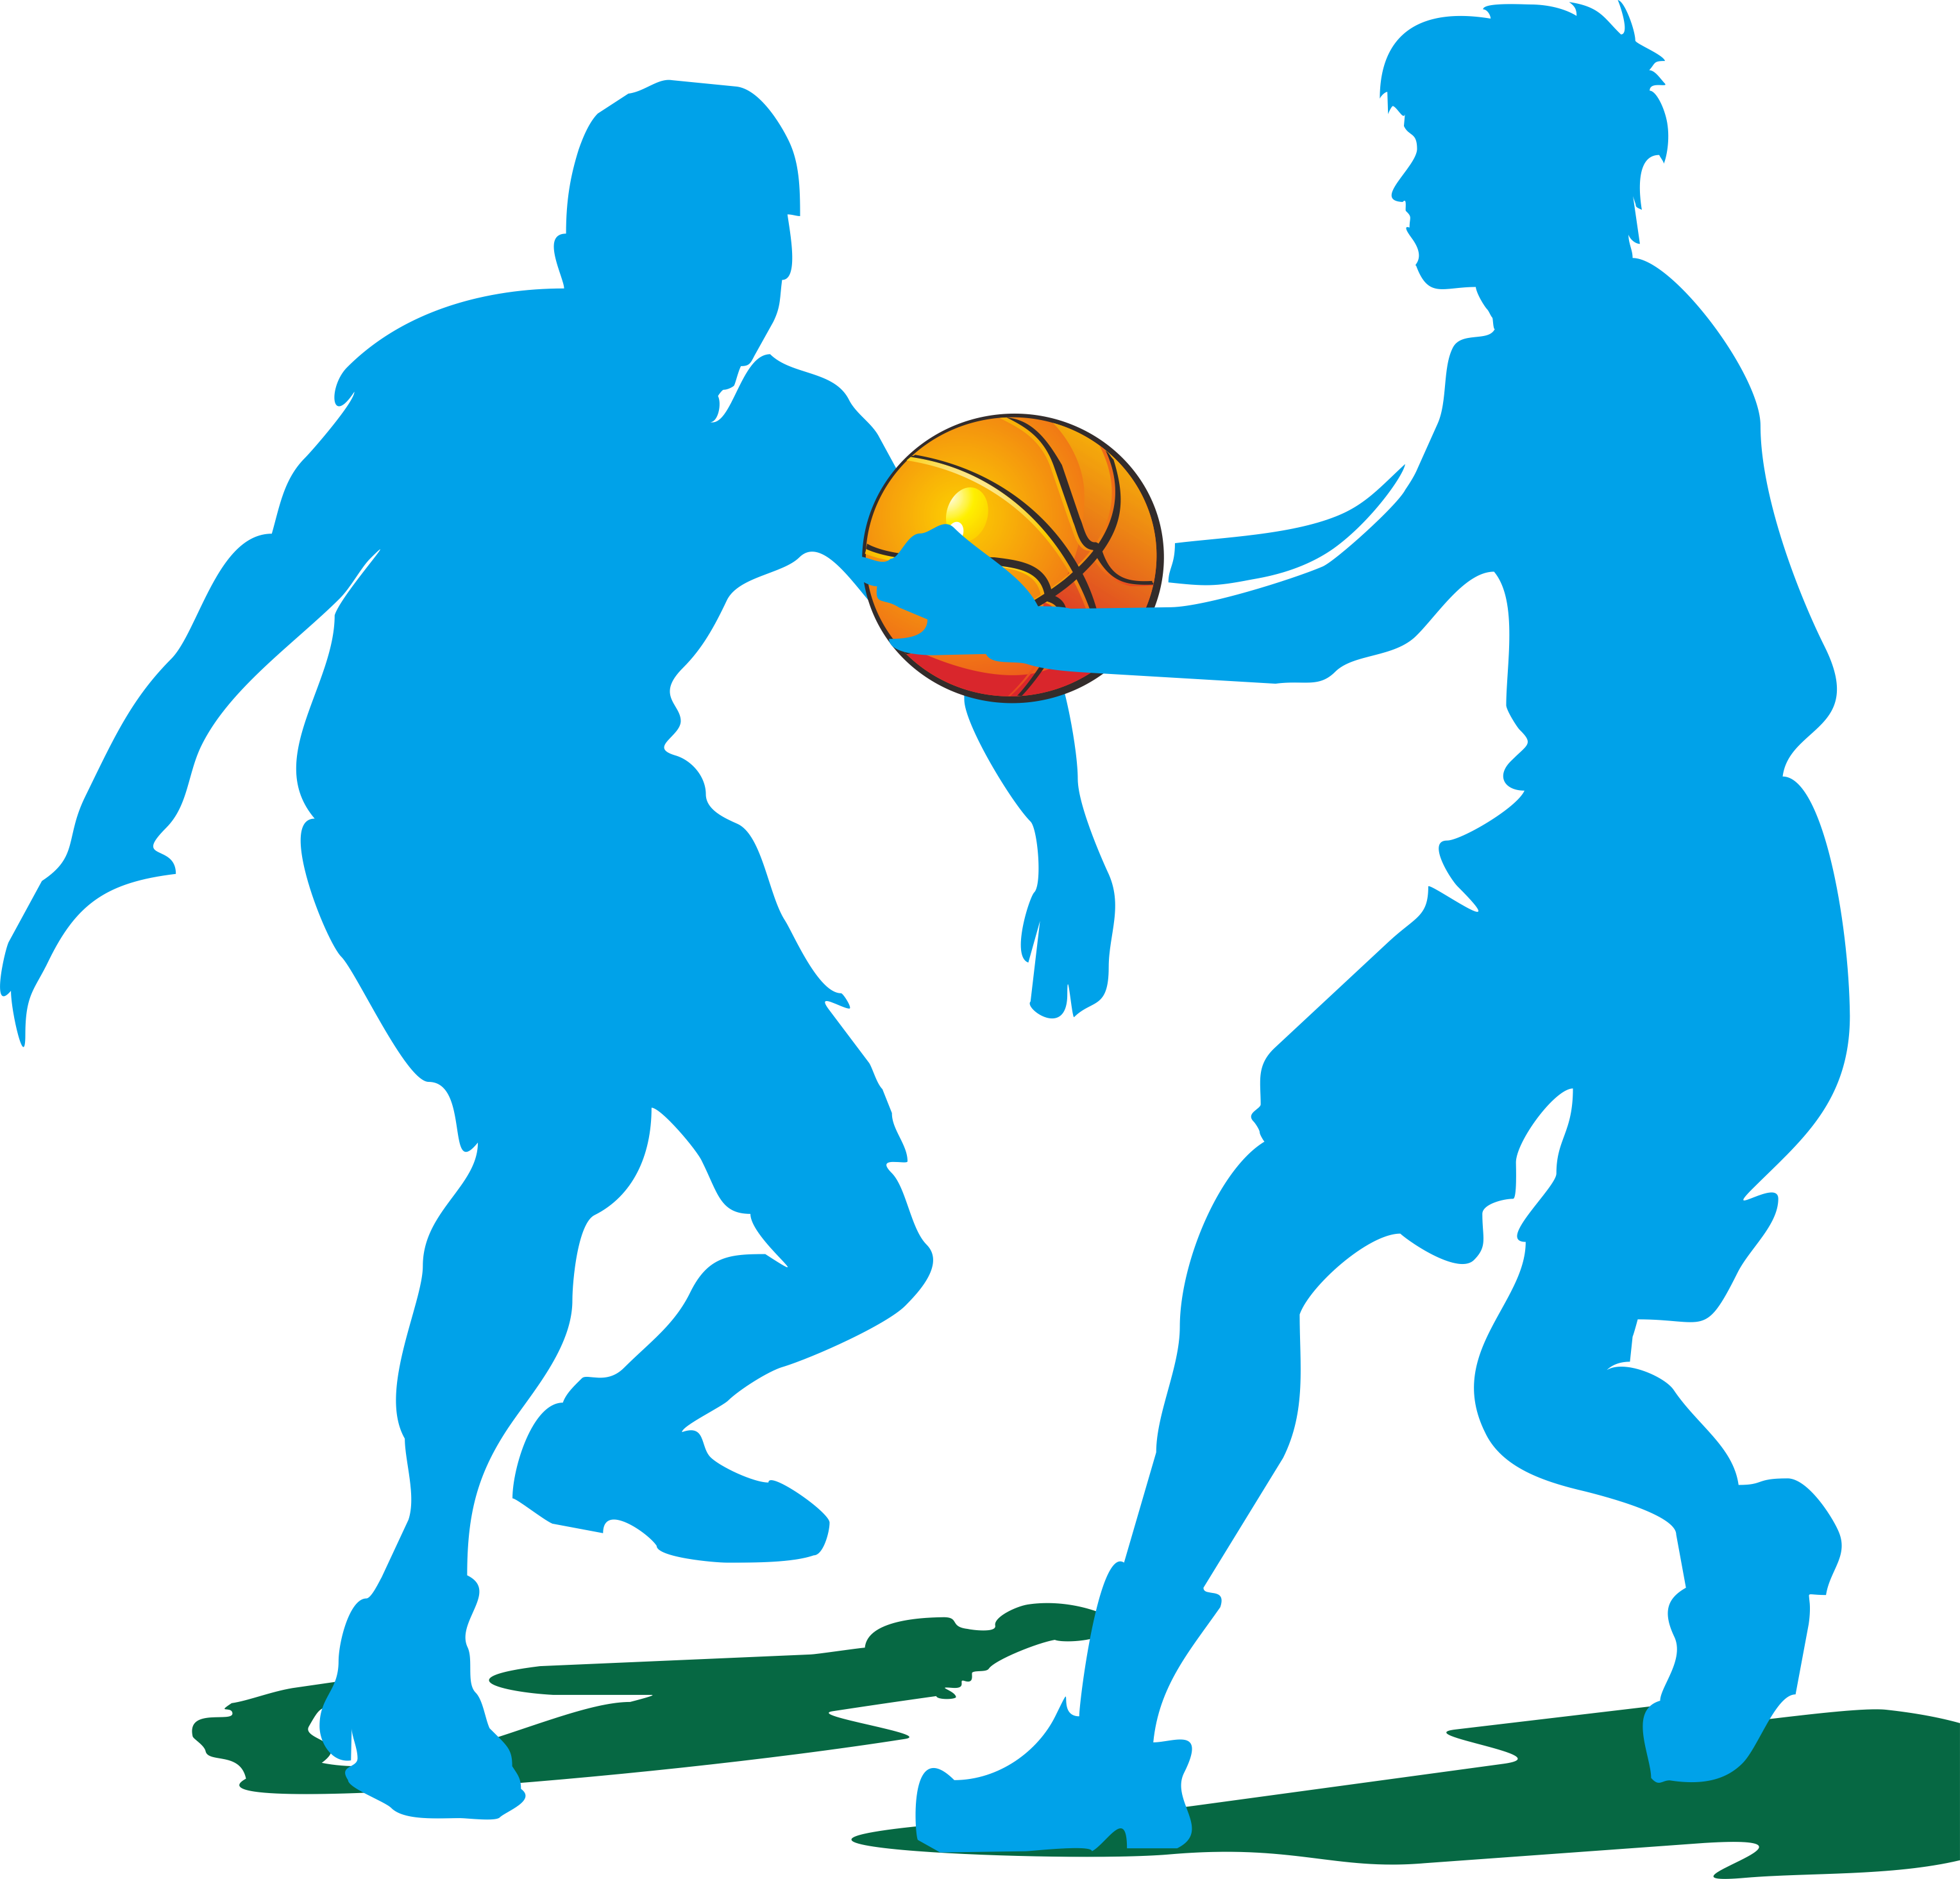 Basketball silhouette clip art. Volleyball clipart purple